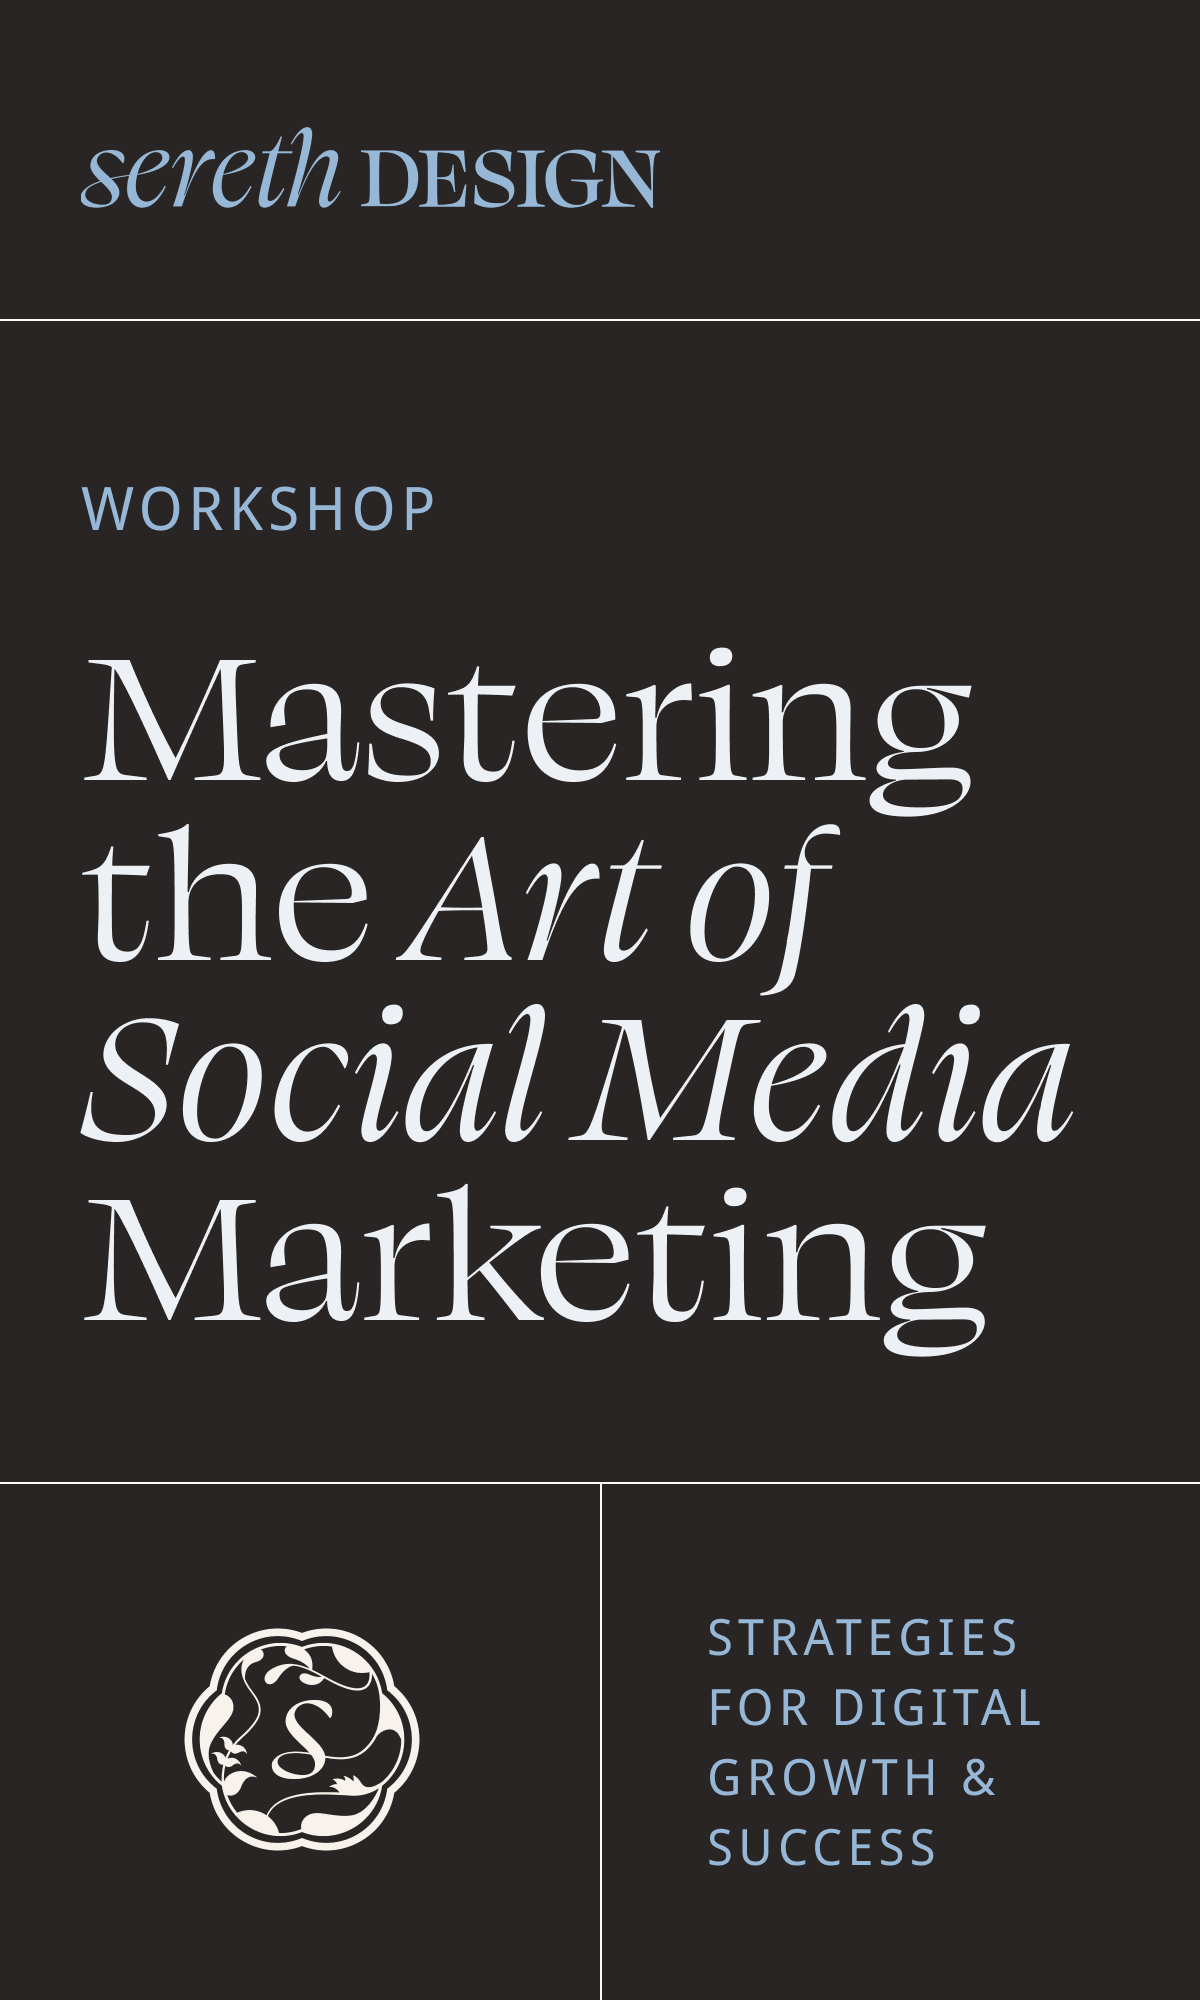 The Art of Social Media Marketing: FREE Workshop — Sereth Design ...